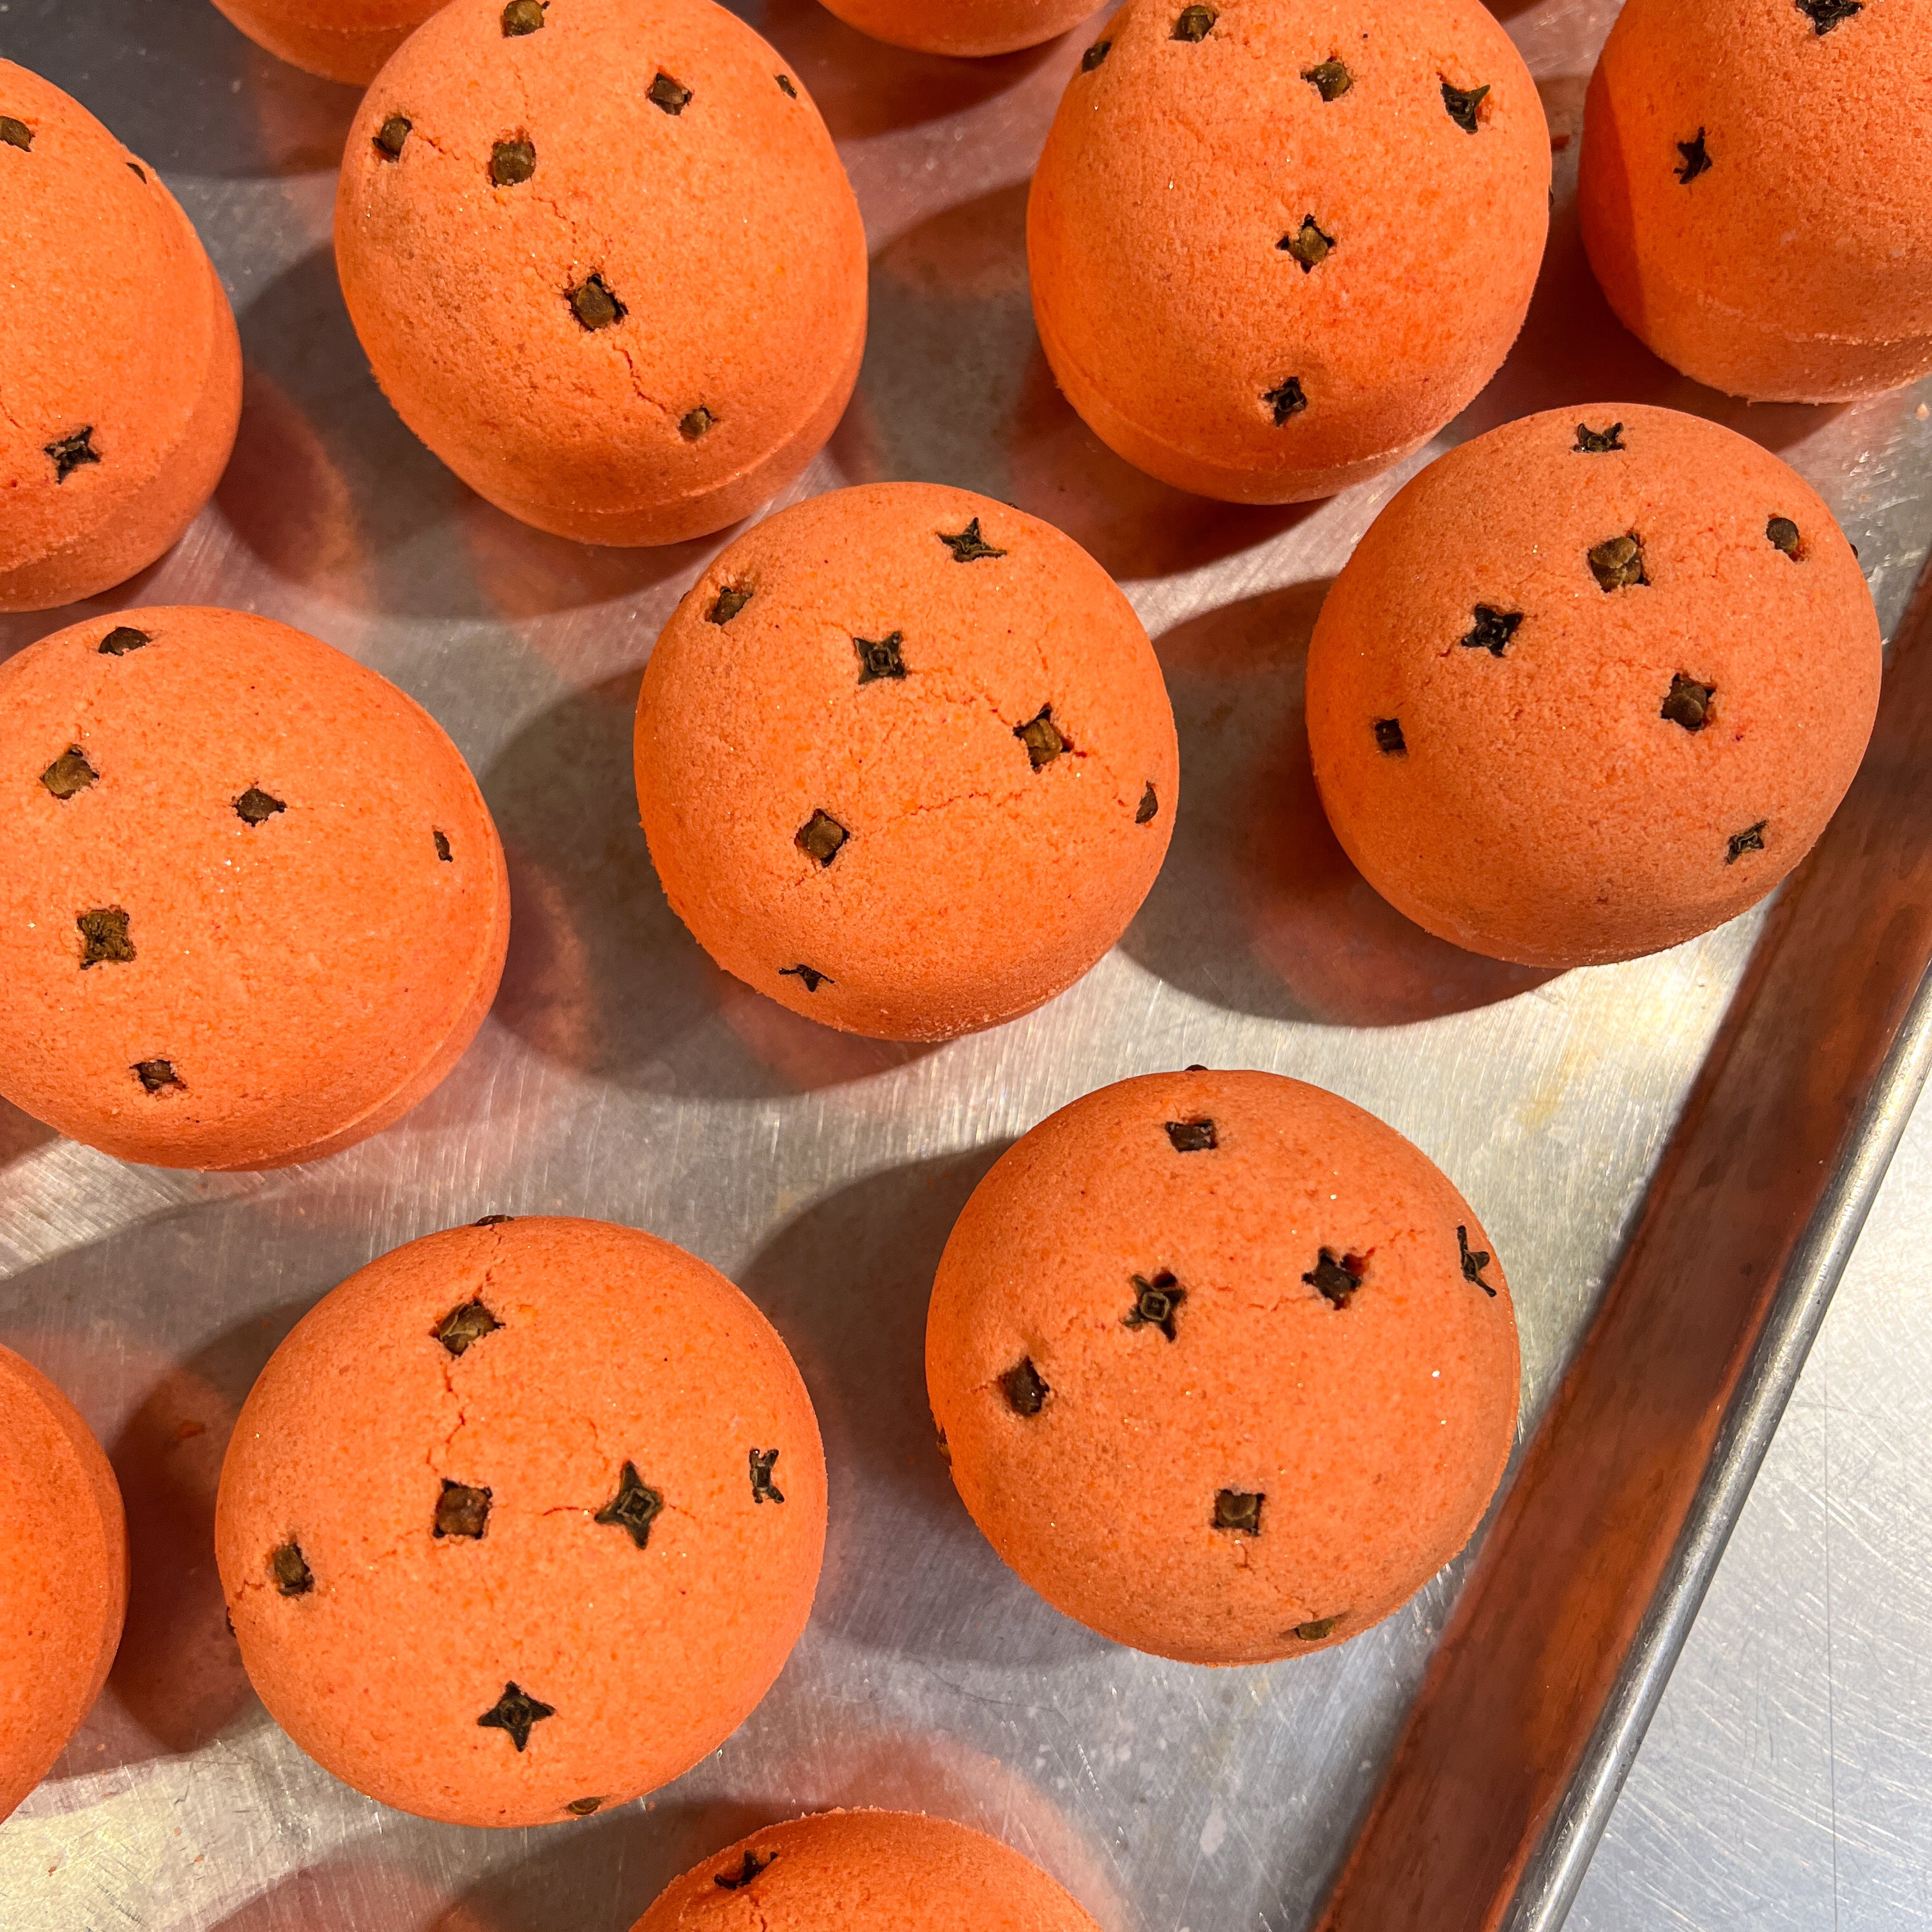 Yule Pomander Oranges: Creating a Sacred Winter Ritual